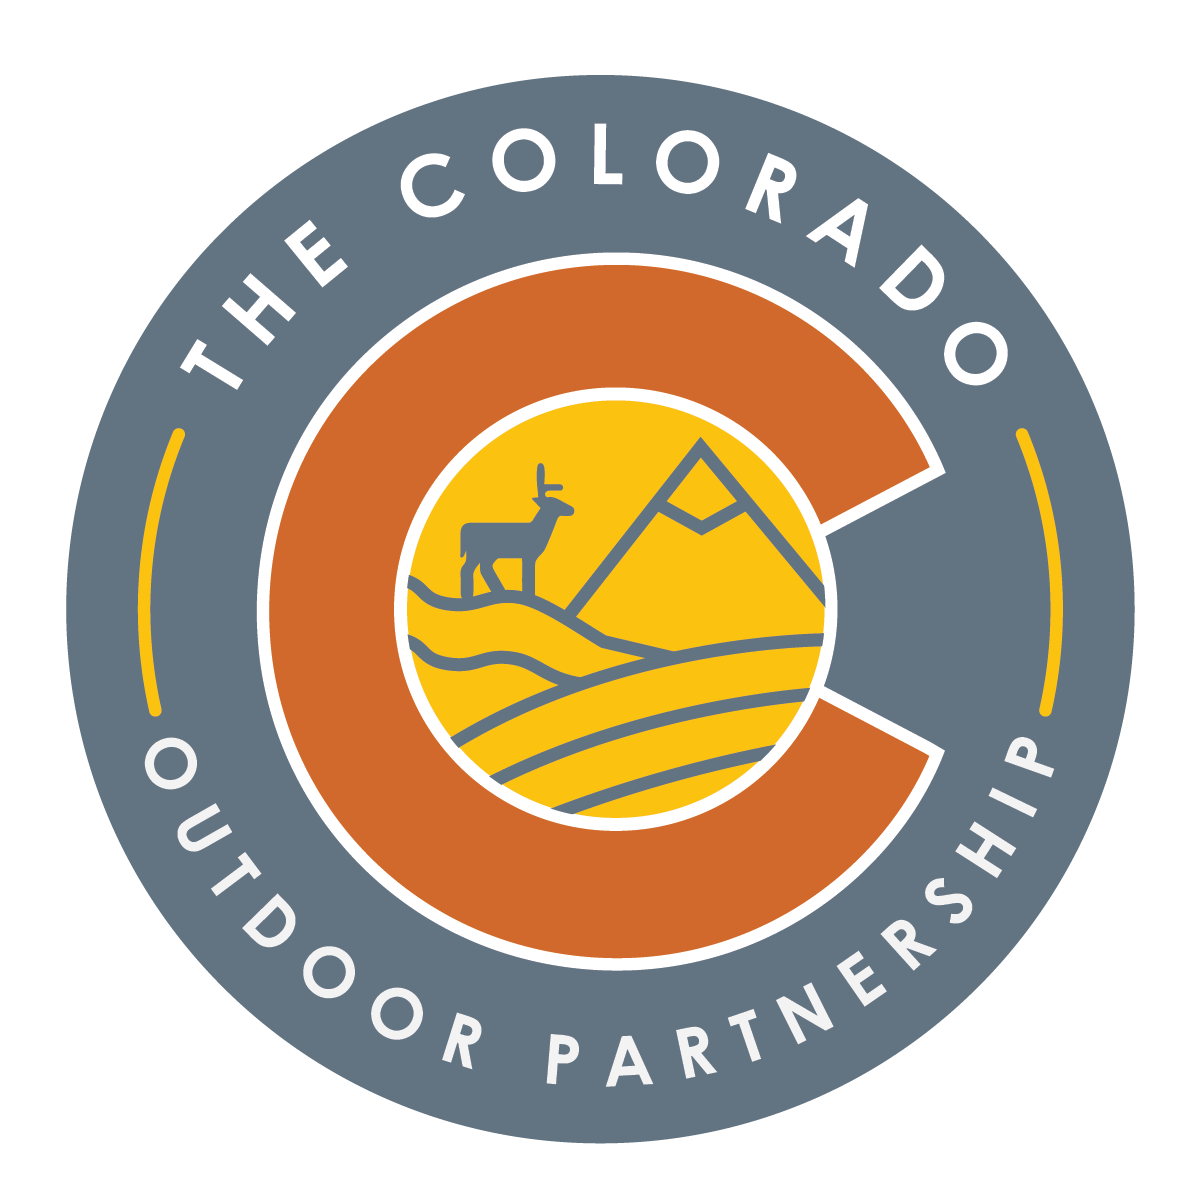 The Colorado Outdoor Partnership